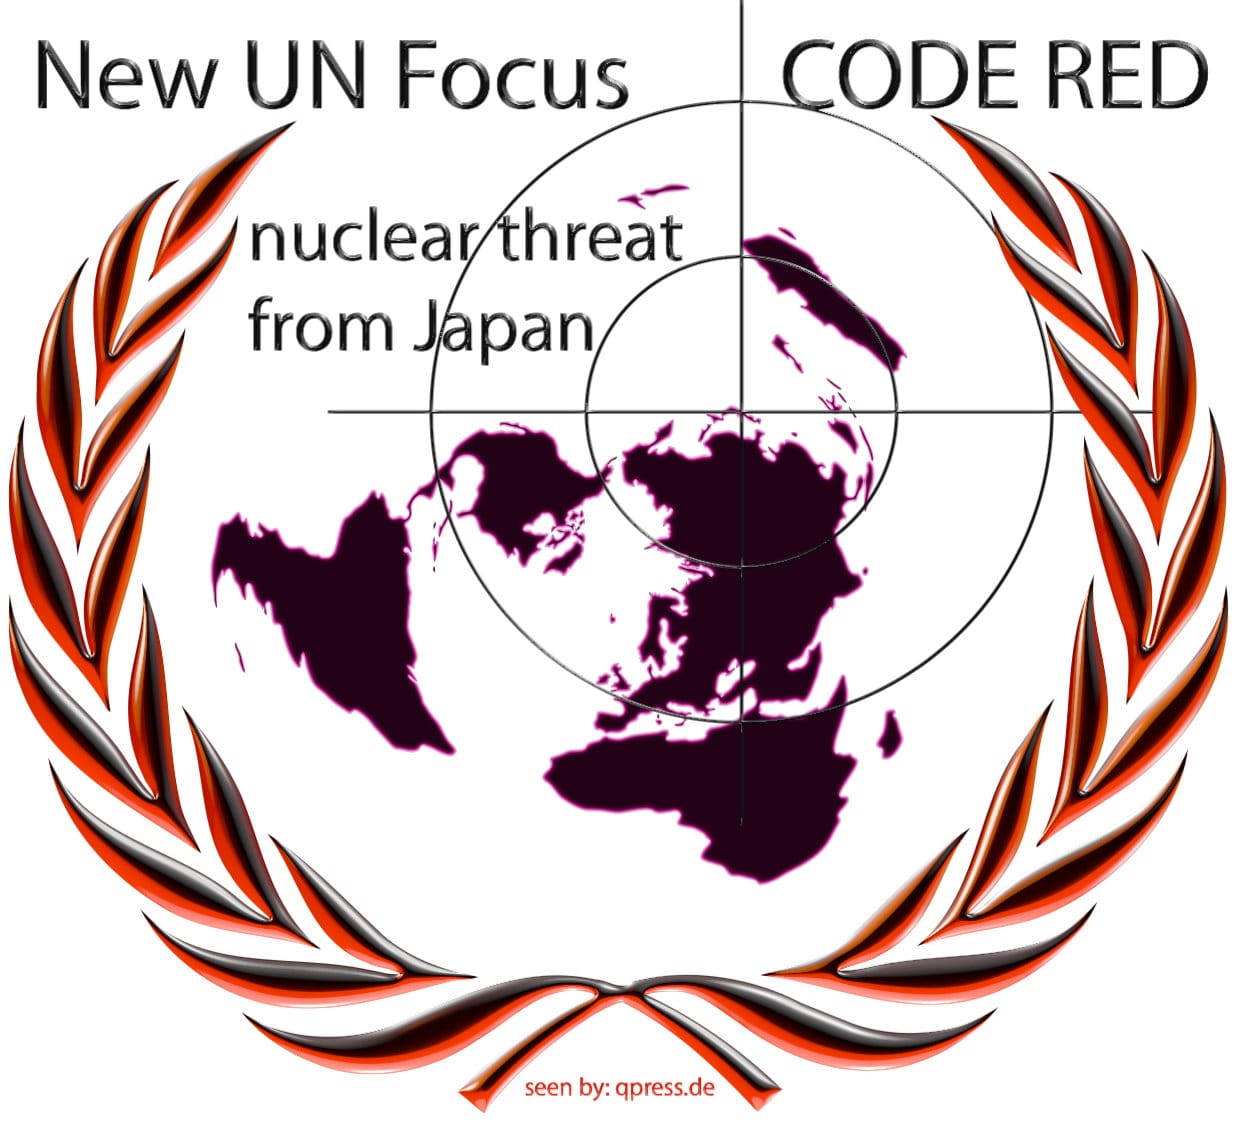 New UN Focus